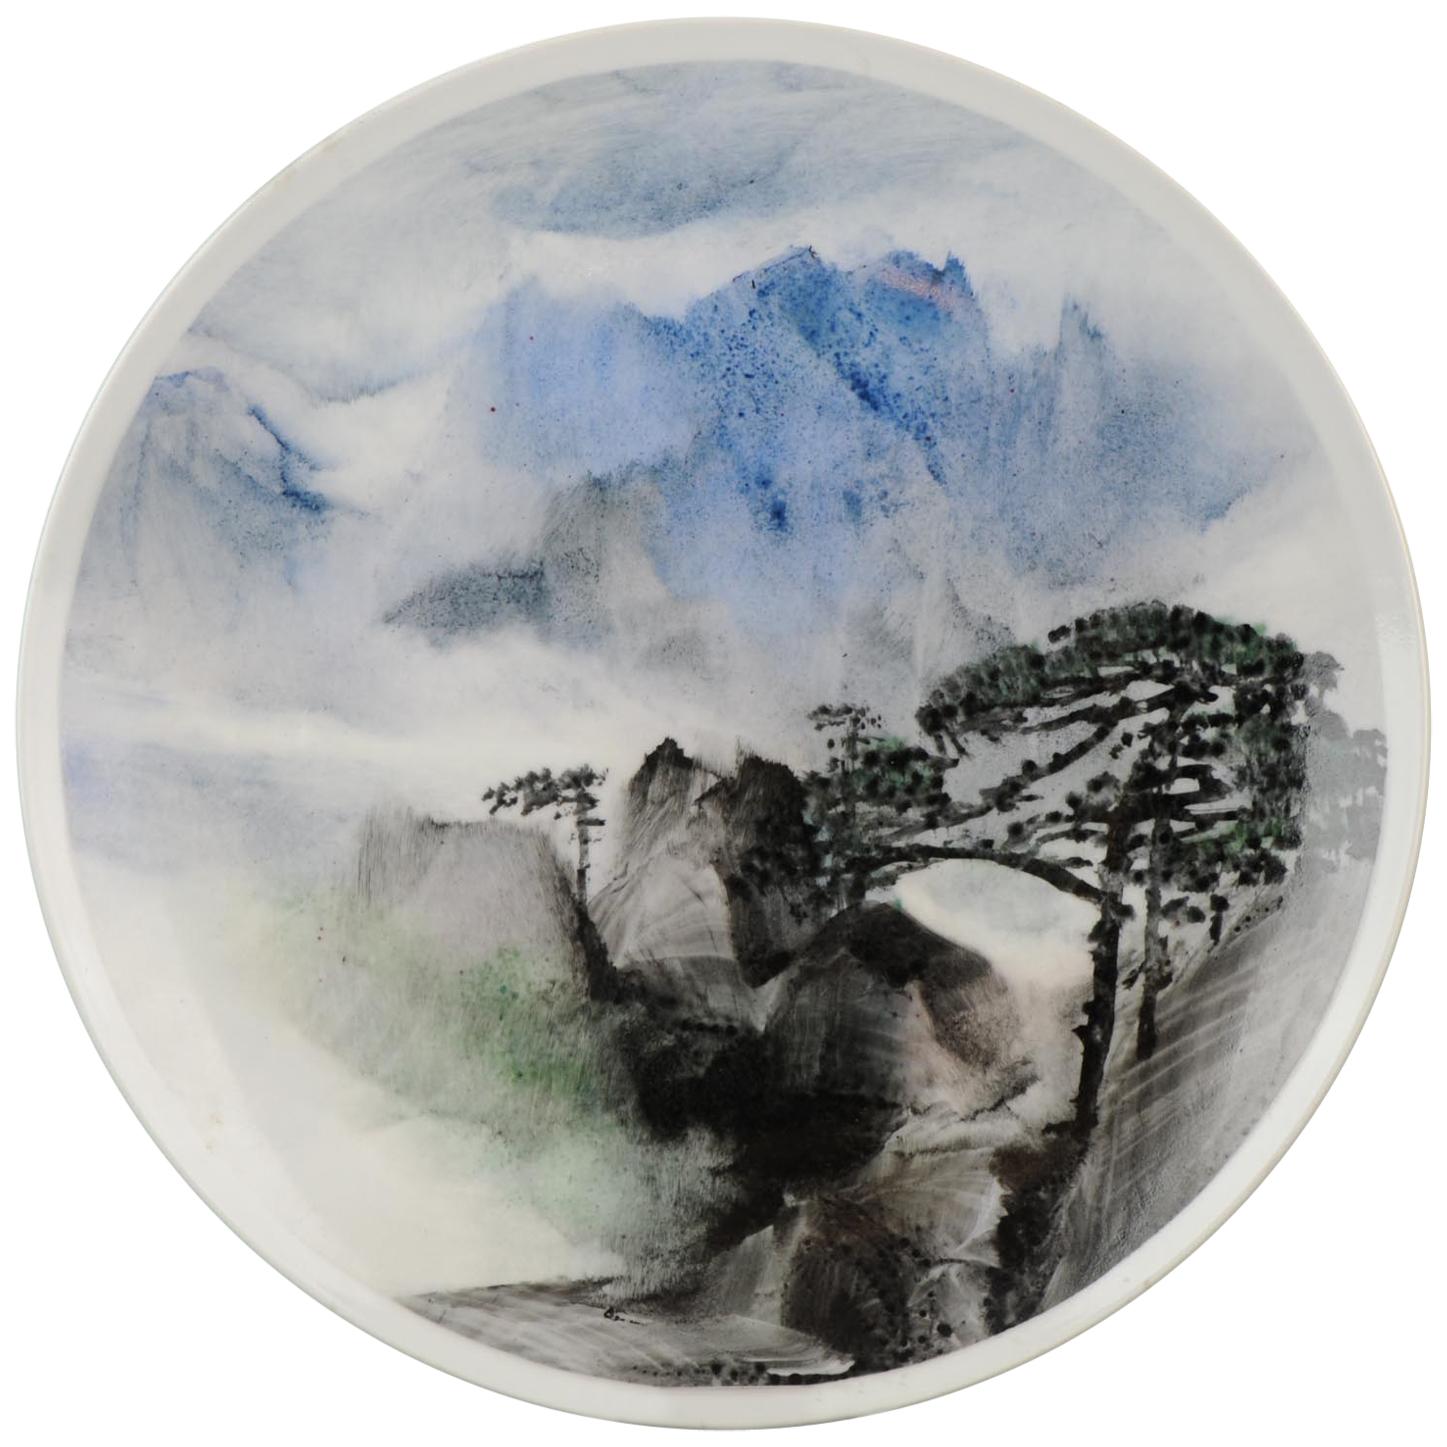 Li Linhong '1942' "Mount Huangshan" Artist Marked Plate Chinese Porcelain